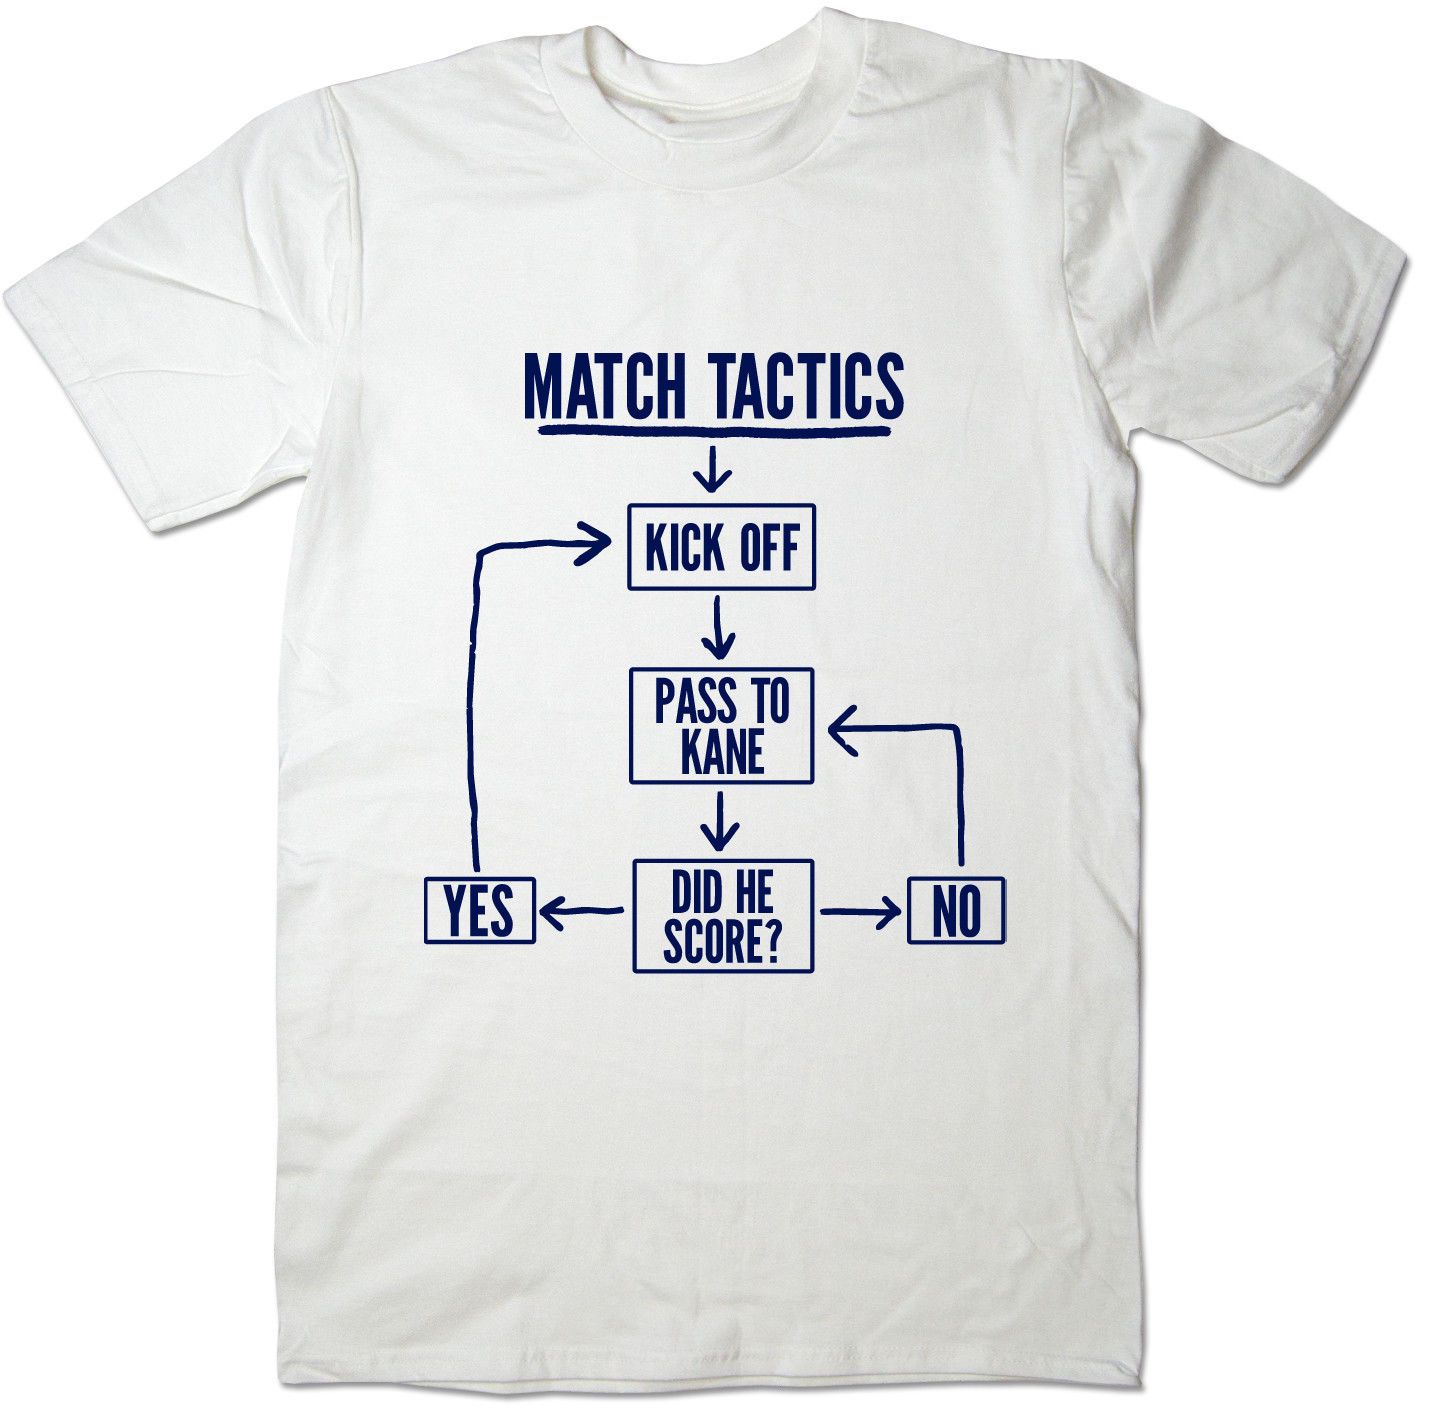 Pass to Kane Funny Tottenham FC Football T-shirt Match Tactics